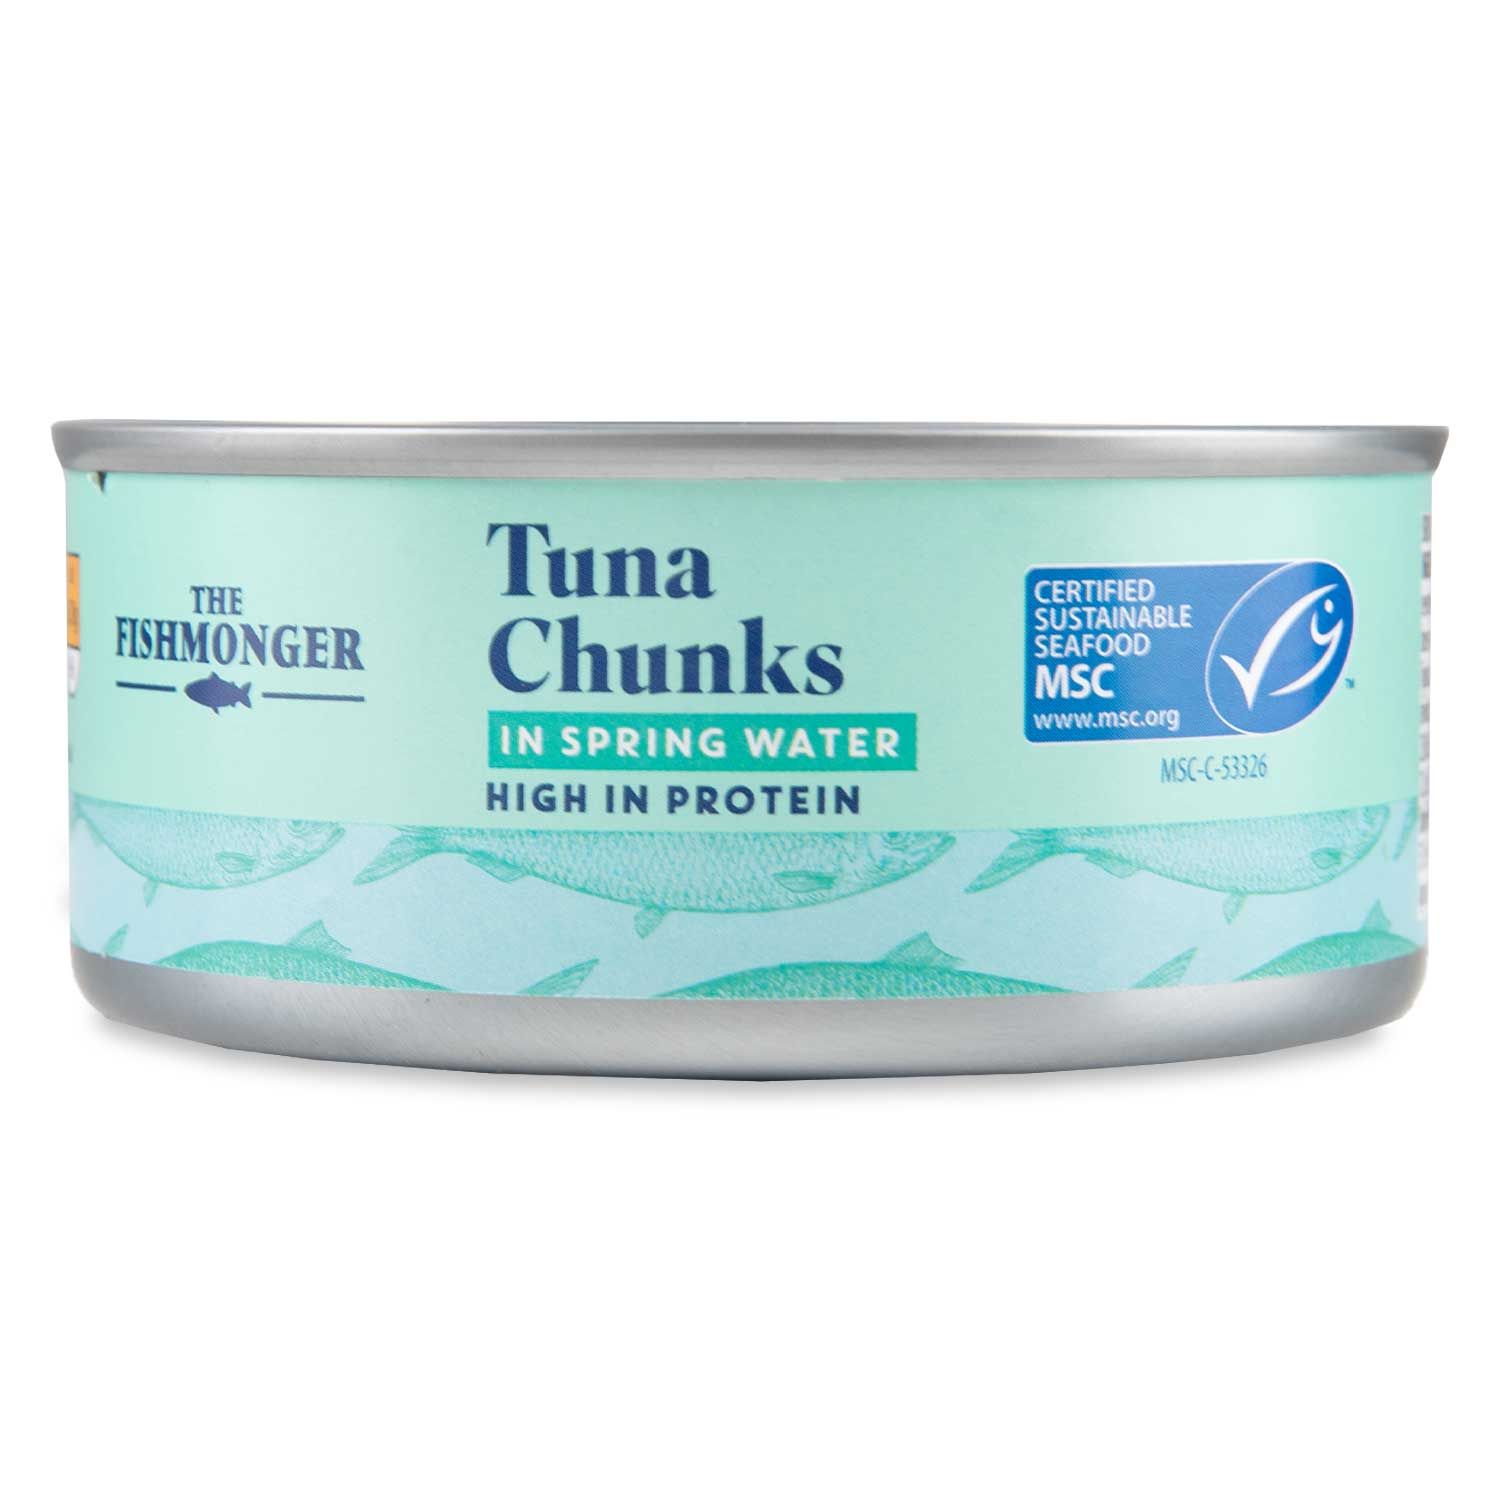 M&S Tuna Chunks In Spring Water, 43% OFF